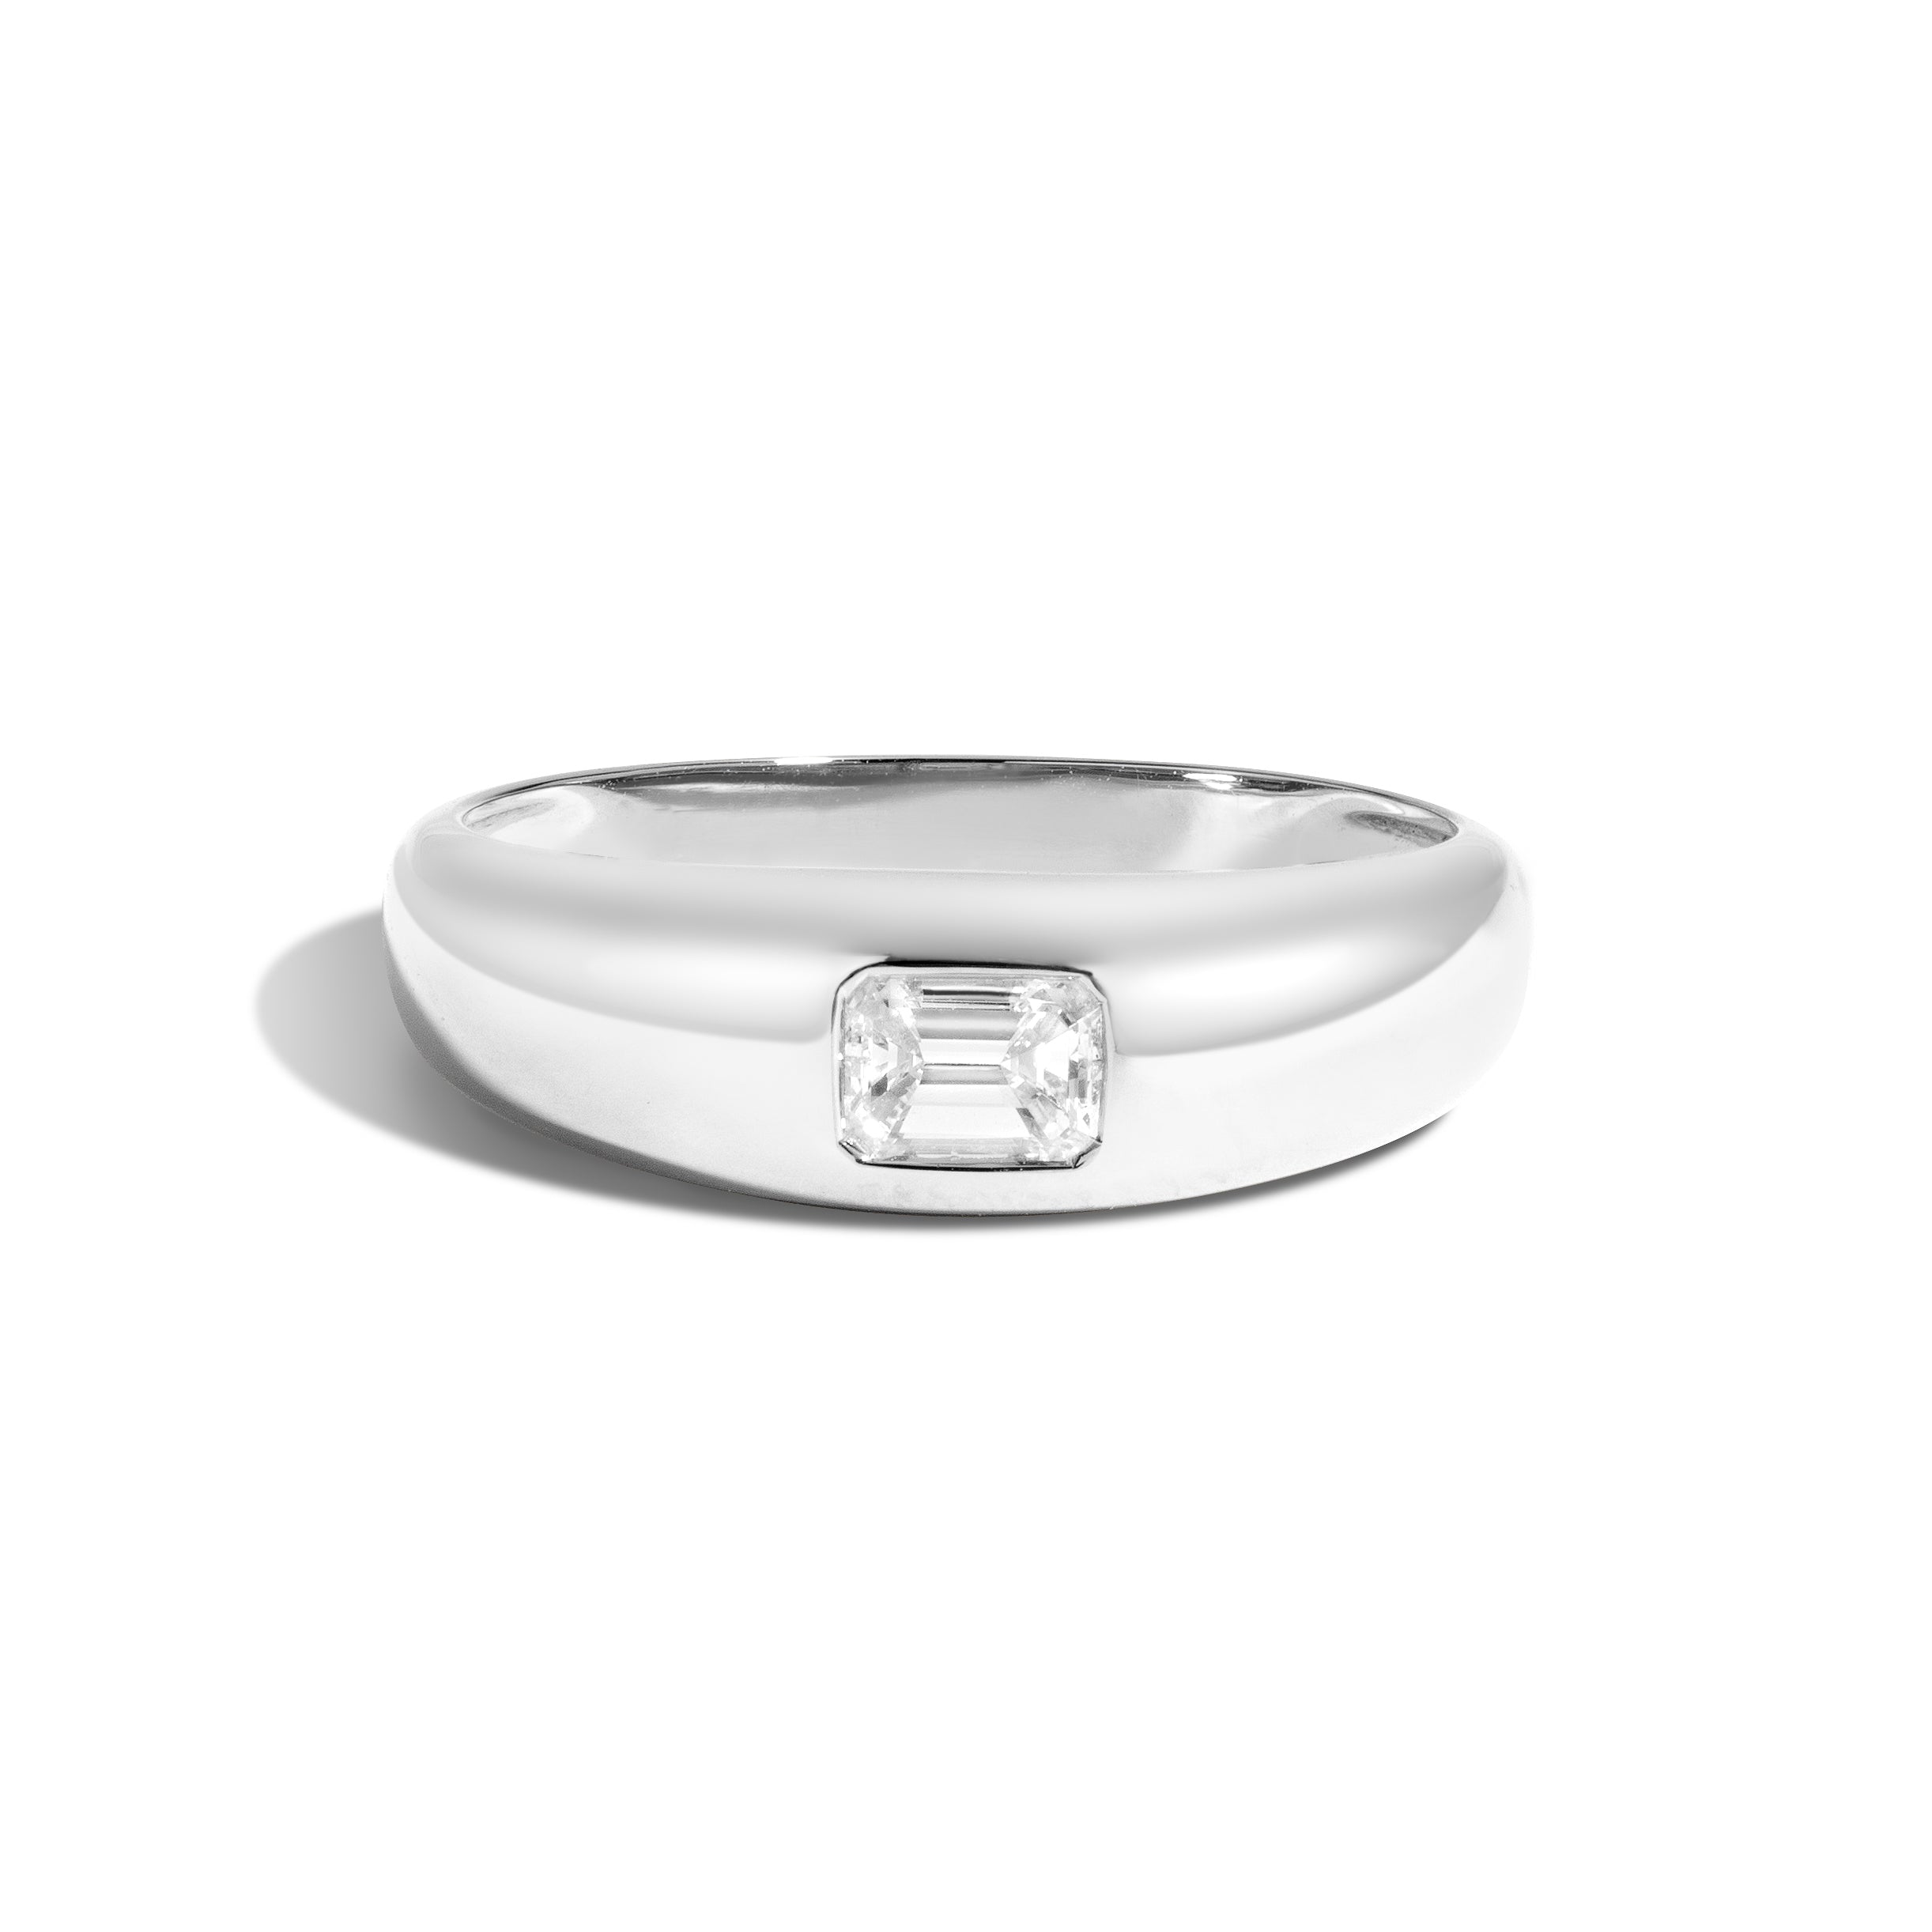 Shahla Karimi Bombe Ring with Emerald Cut 14K White Gold